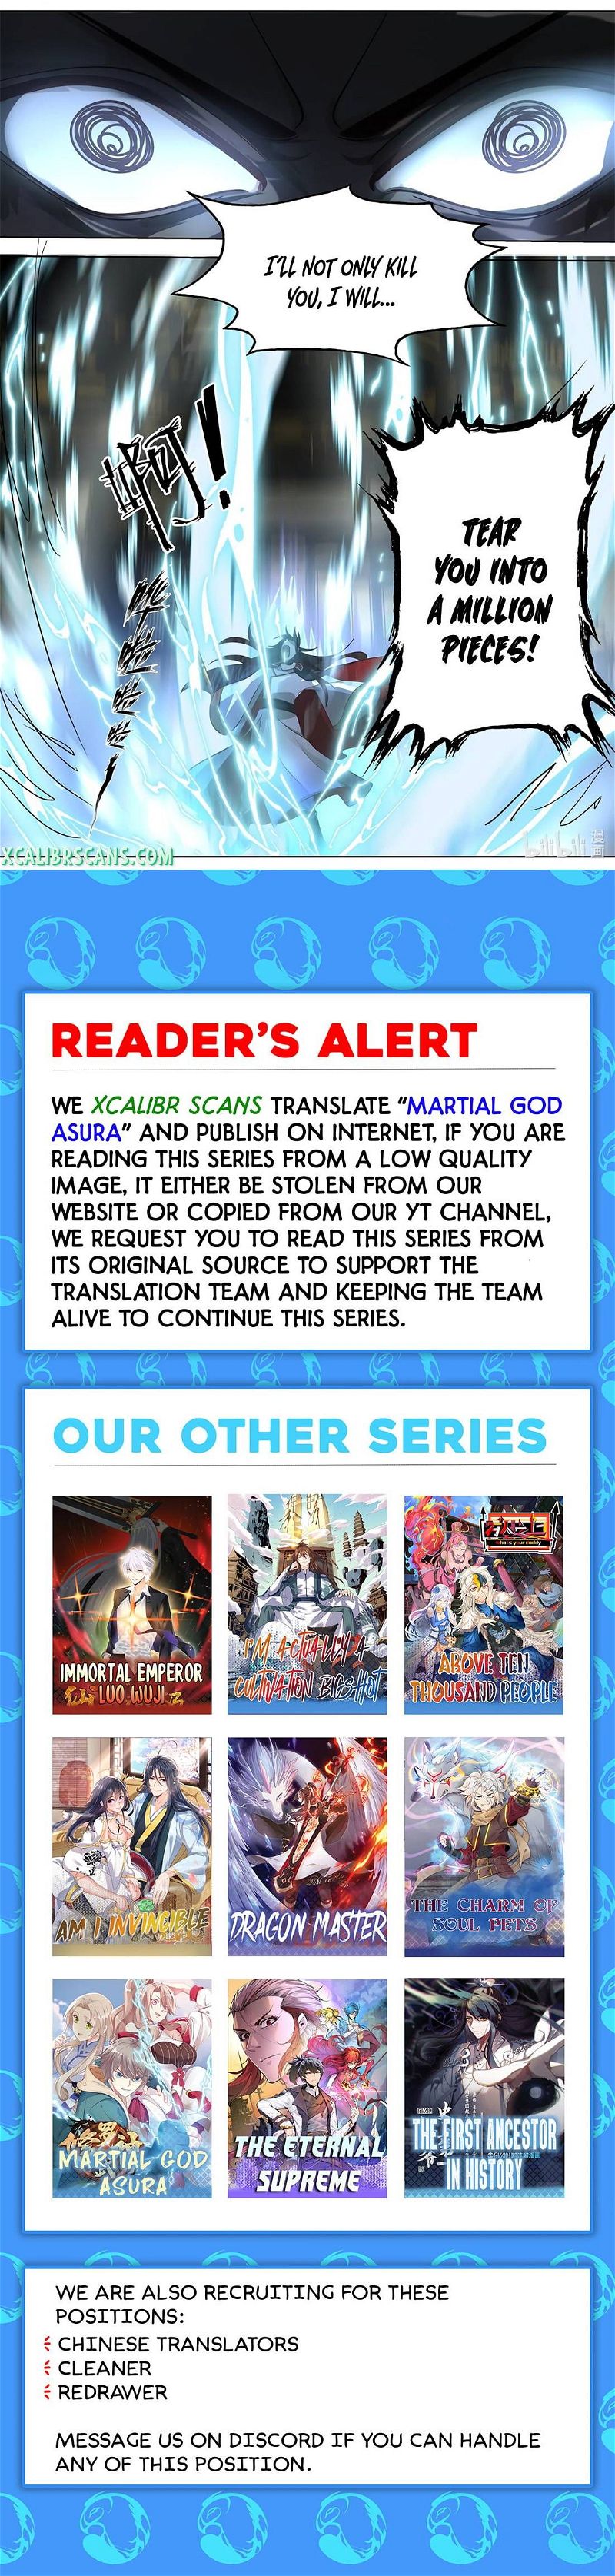 Martial God Asura Chapter 528 page 10